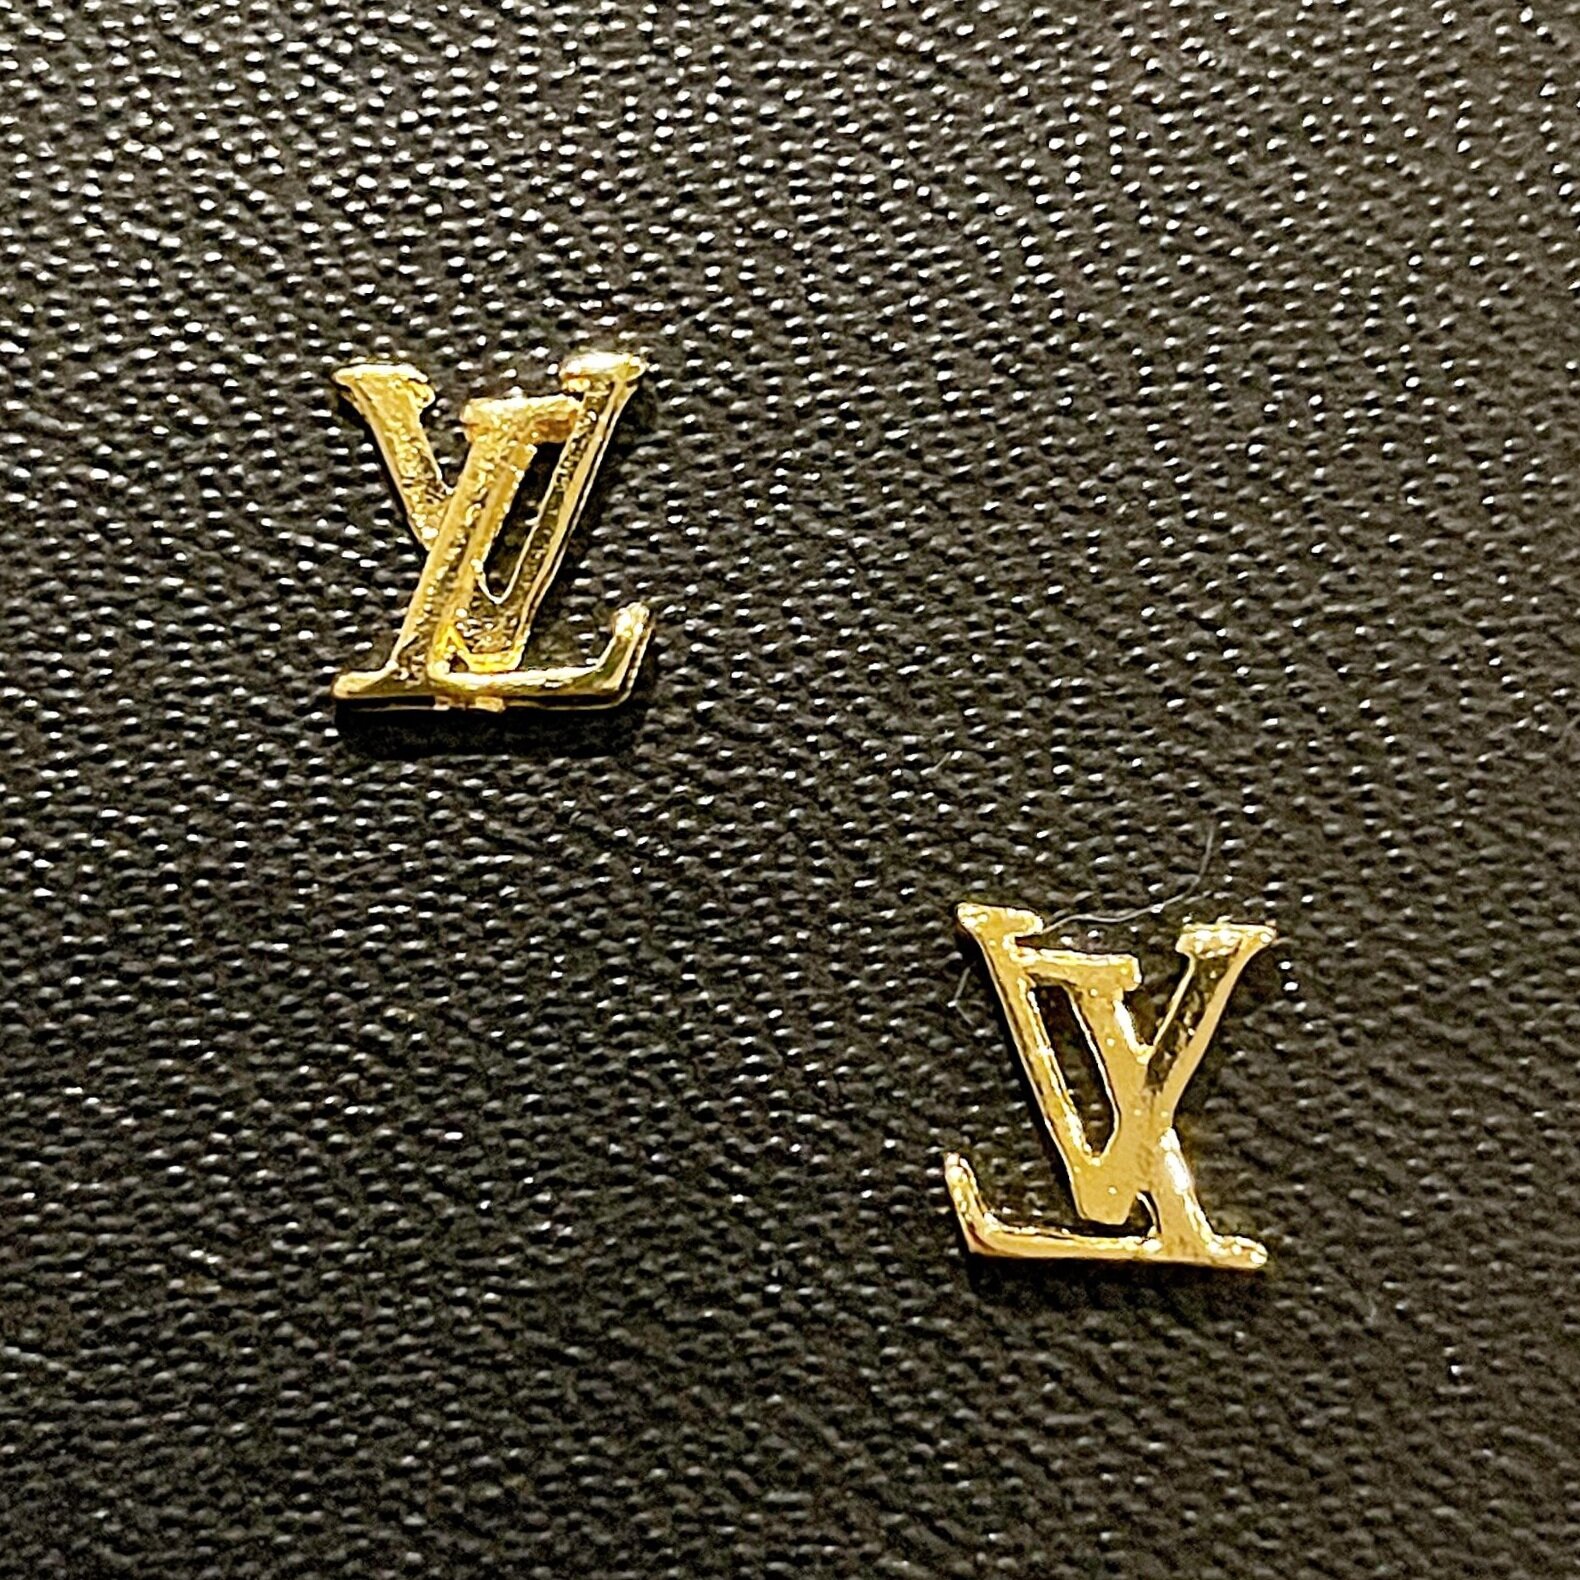 10PCS Louis Vuitton Nail Charms Multicolour Metal Love